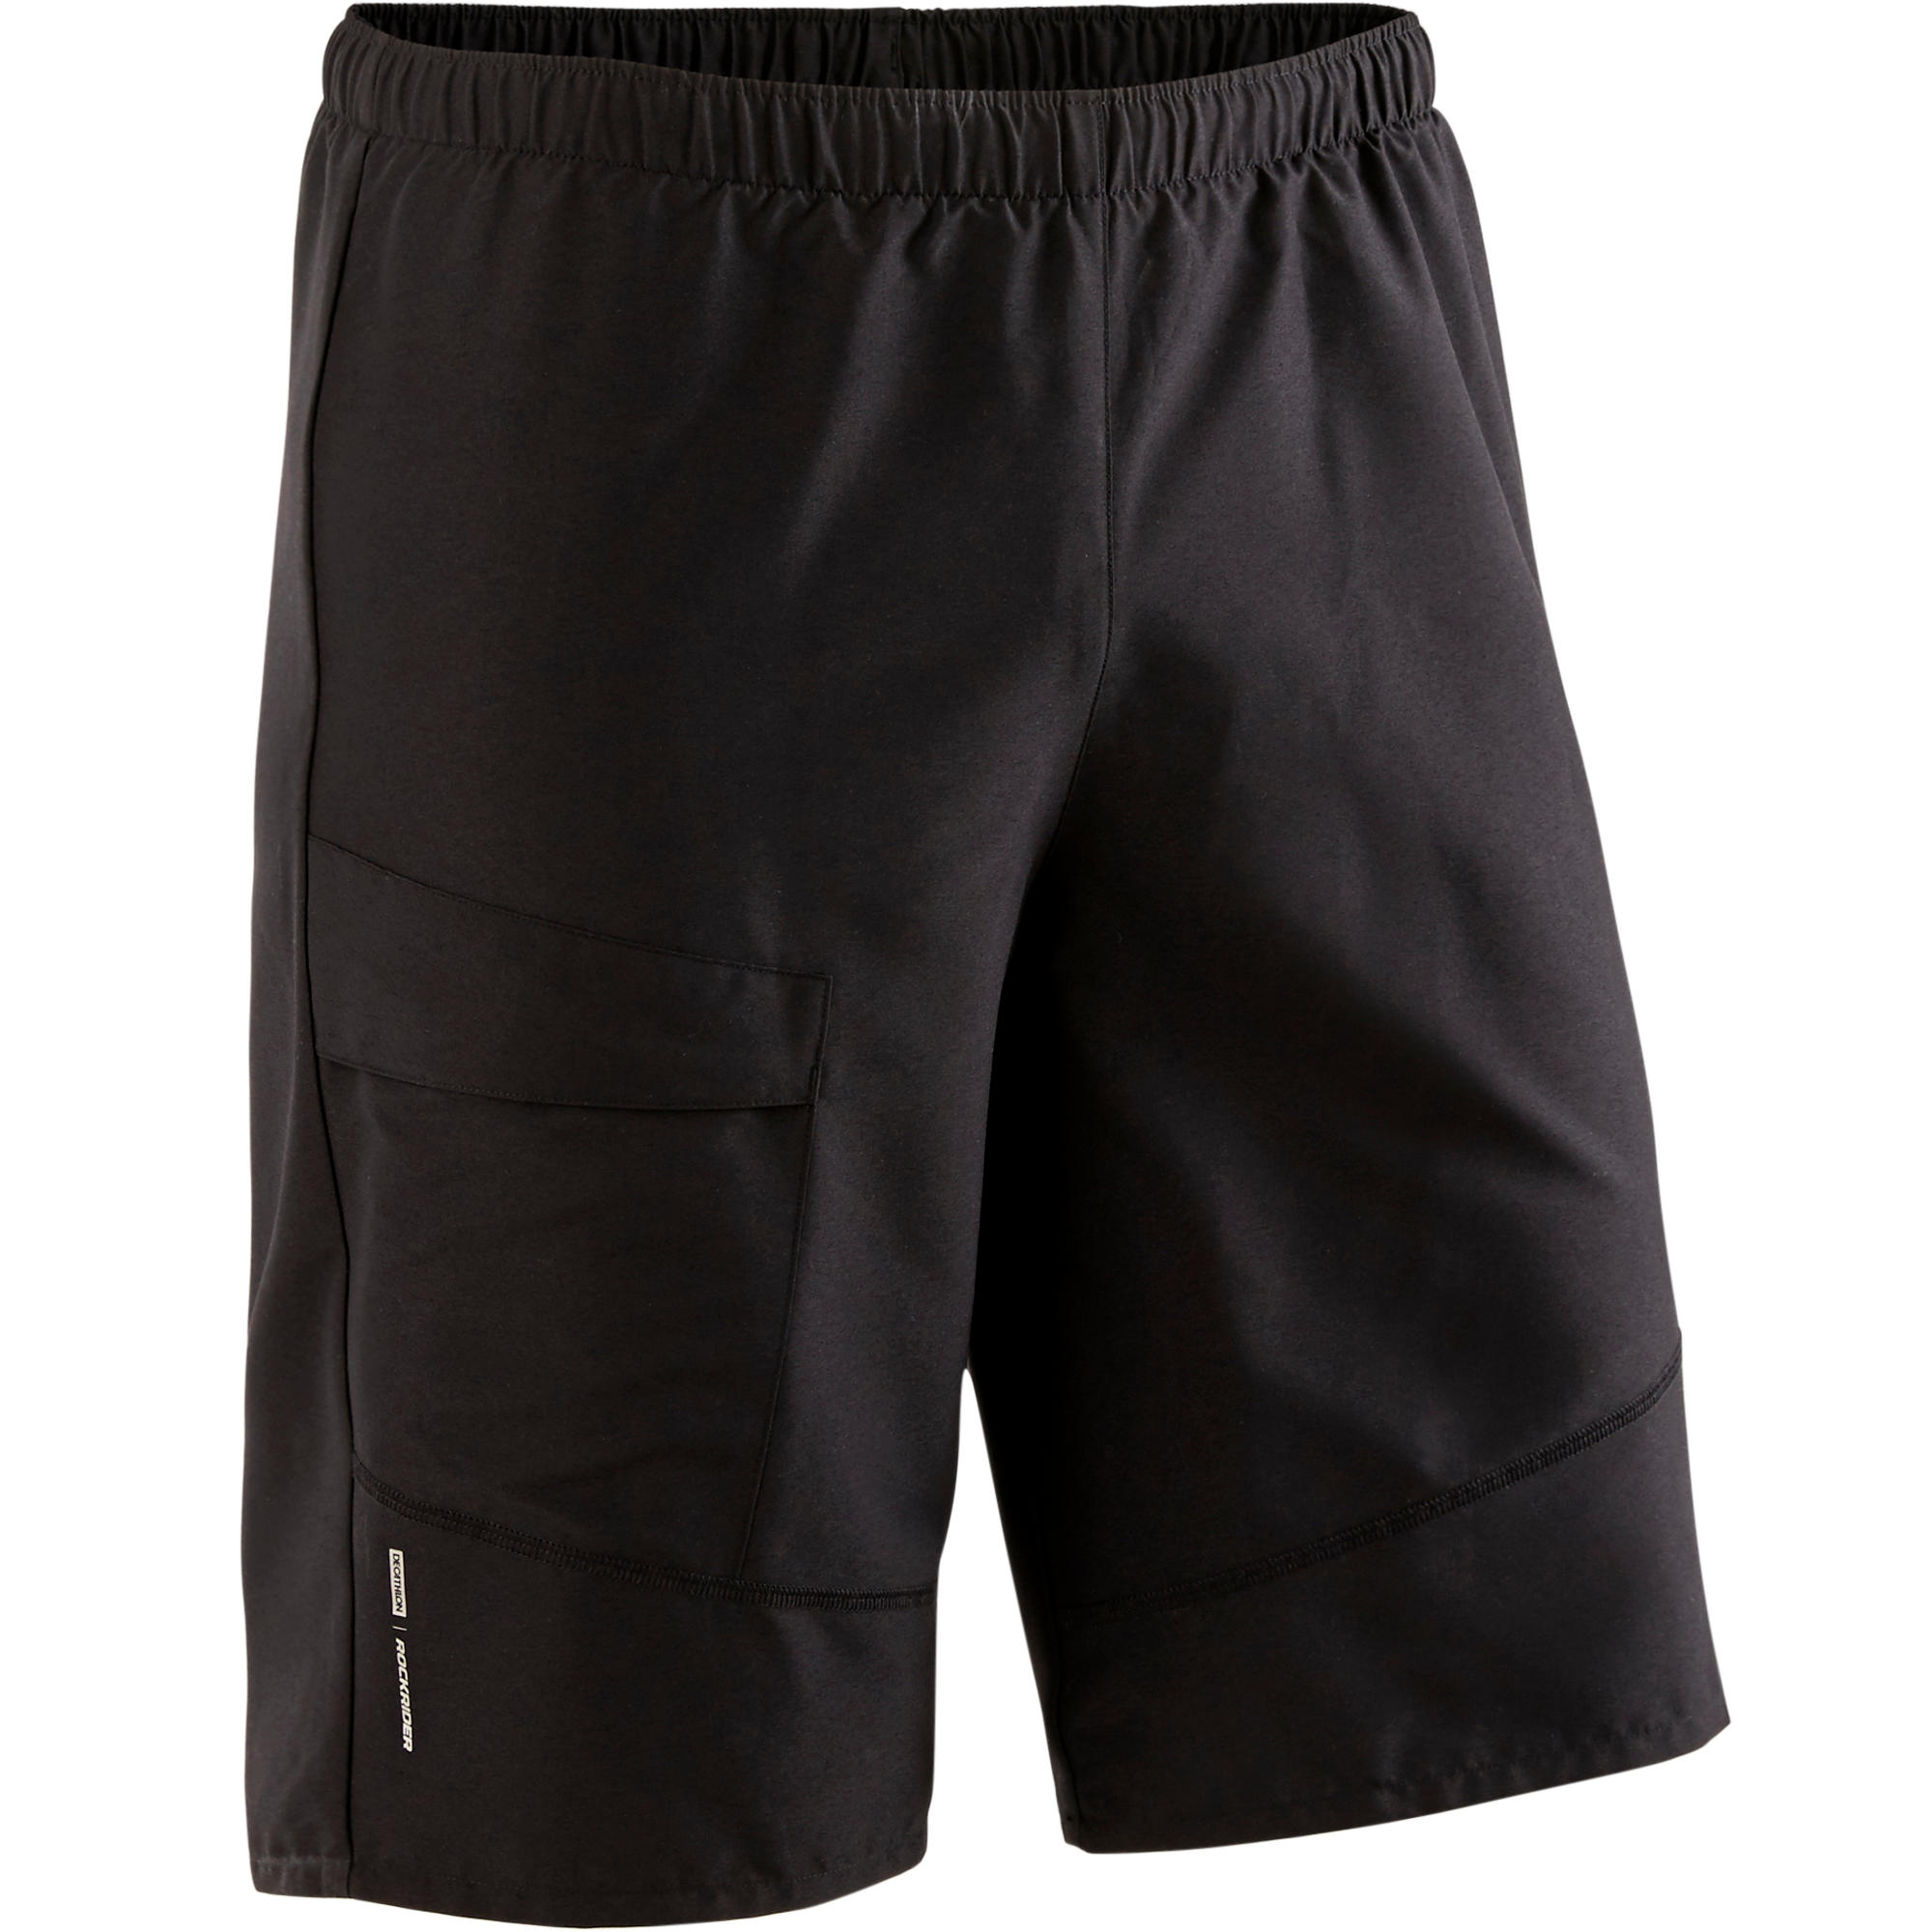 ST 100 Mountain Bike Shorts - Black 